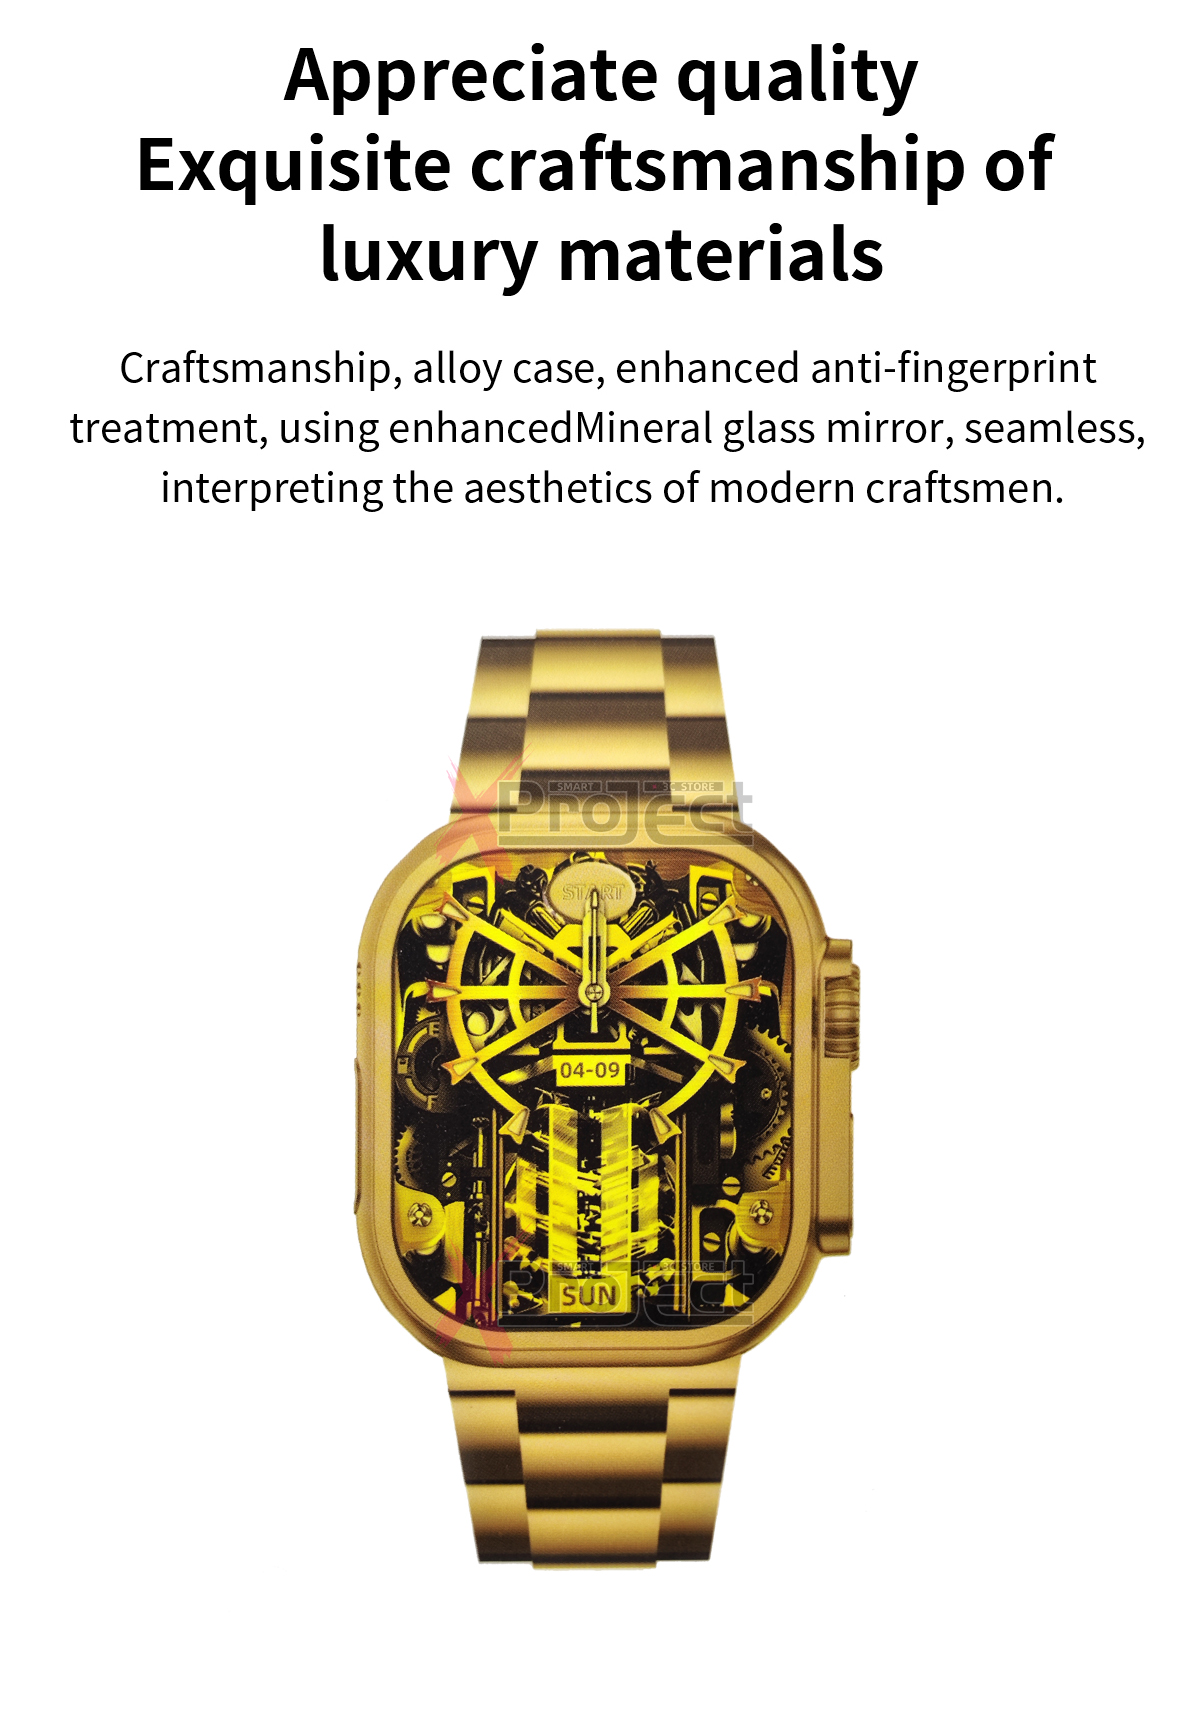 Smartwatch G9 Ultra Pro Oro By NS Tech